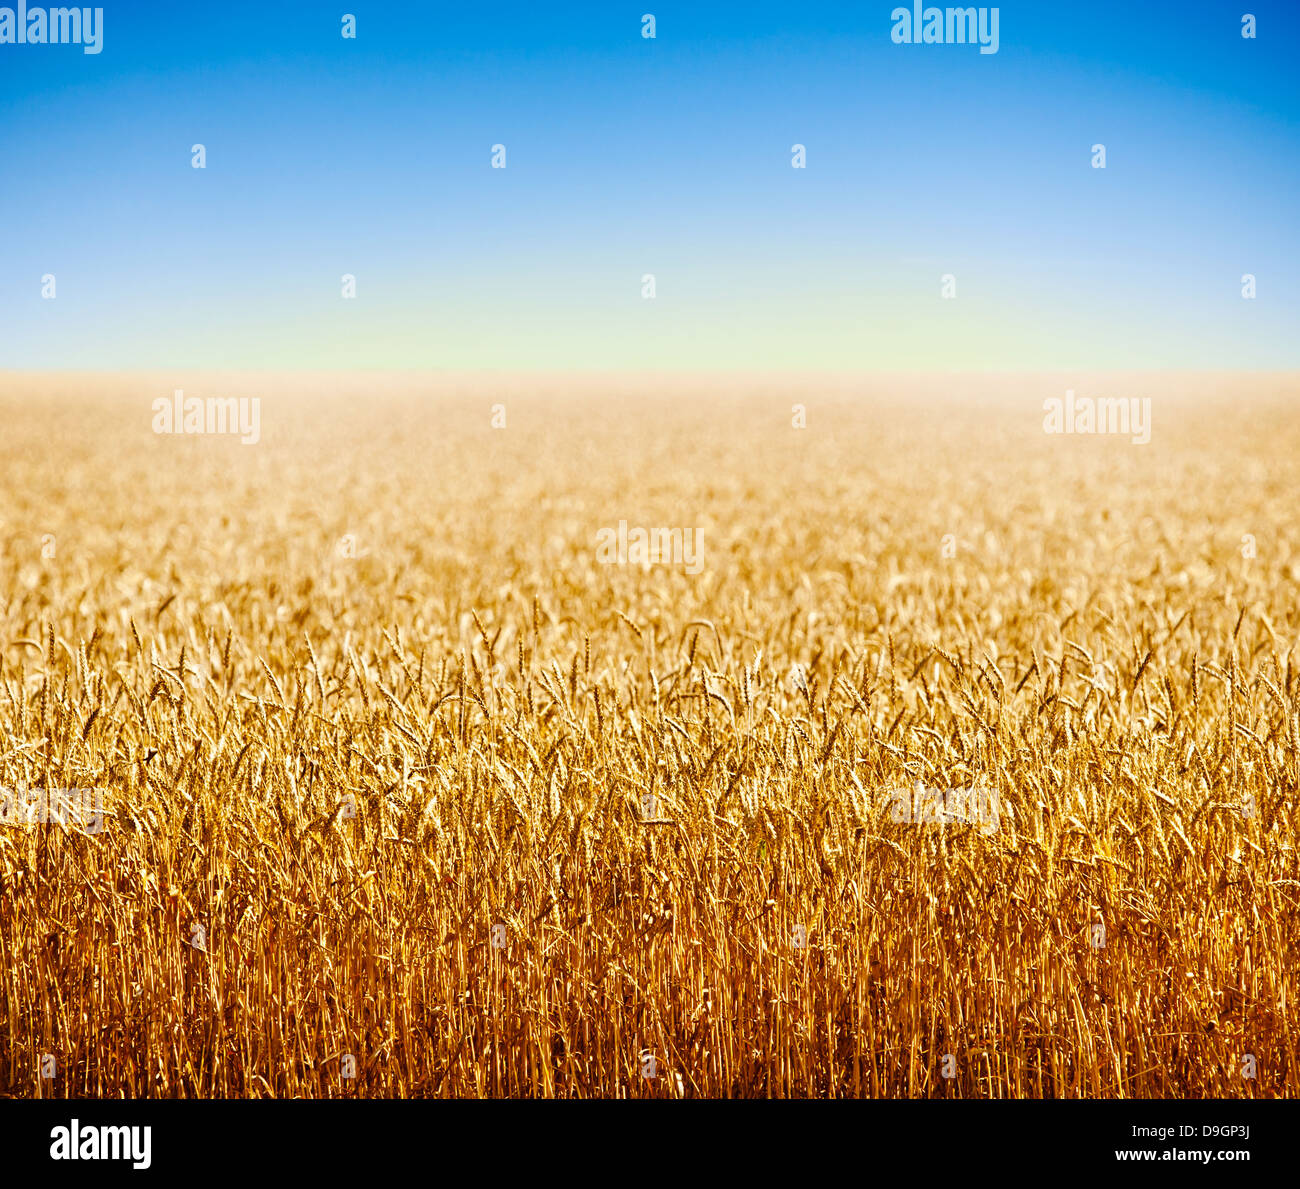 Golden wheat field against deep blue sky Stock Photo